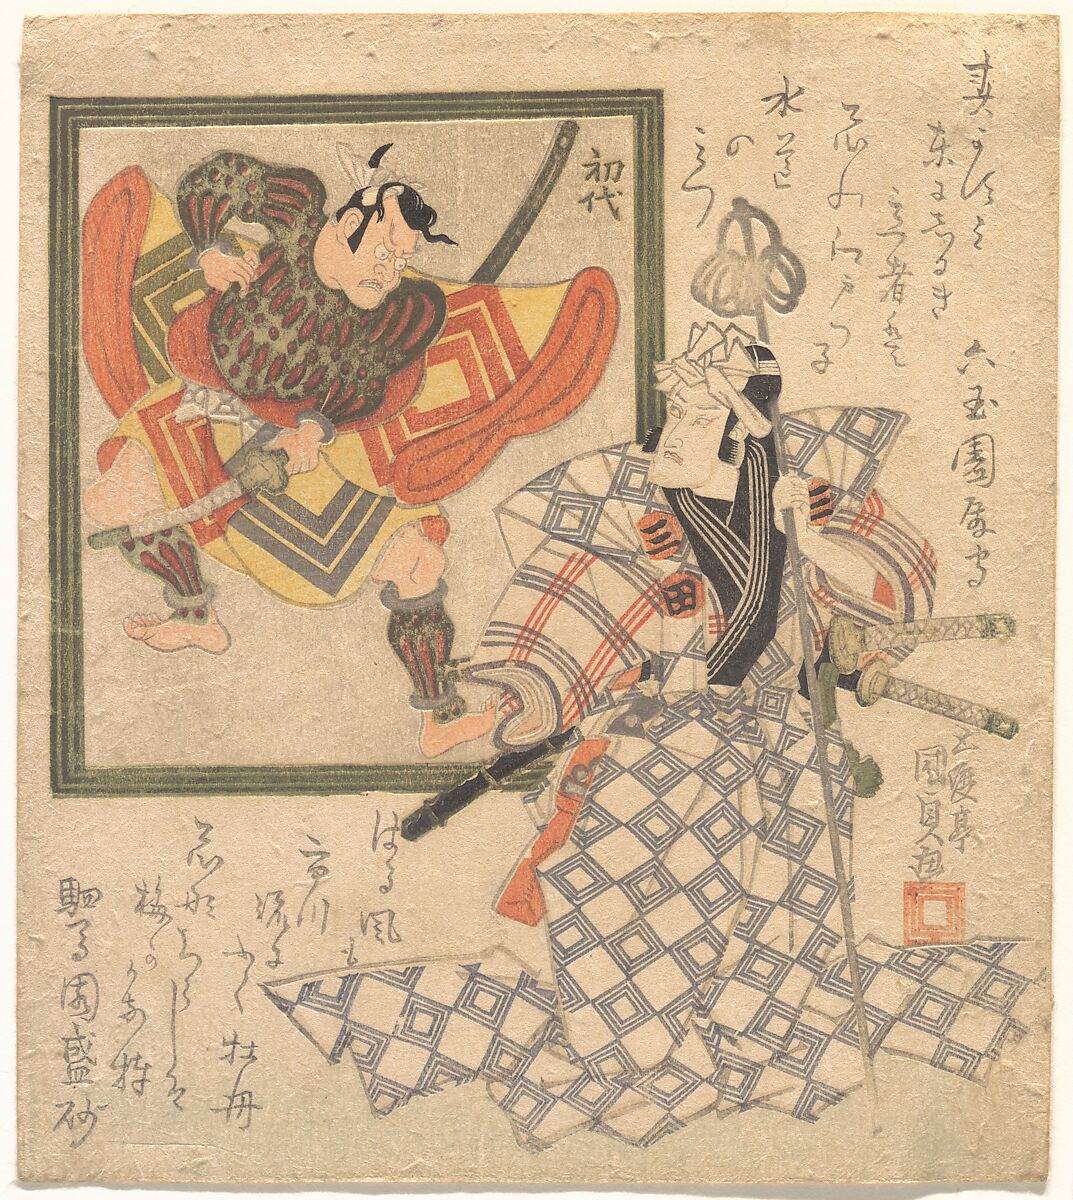 Ichikawa Danjūrō VII Admiring Ichikawa Danjūrō I in an Inset Portrait, Utagawa Kunisada  Japanese, Woodblock print (surimono); ink, color and metallic pigment on paper; shikishiban, Japan